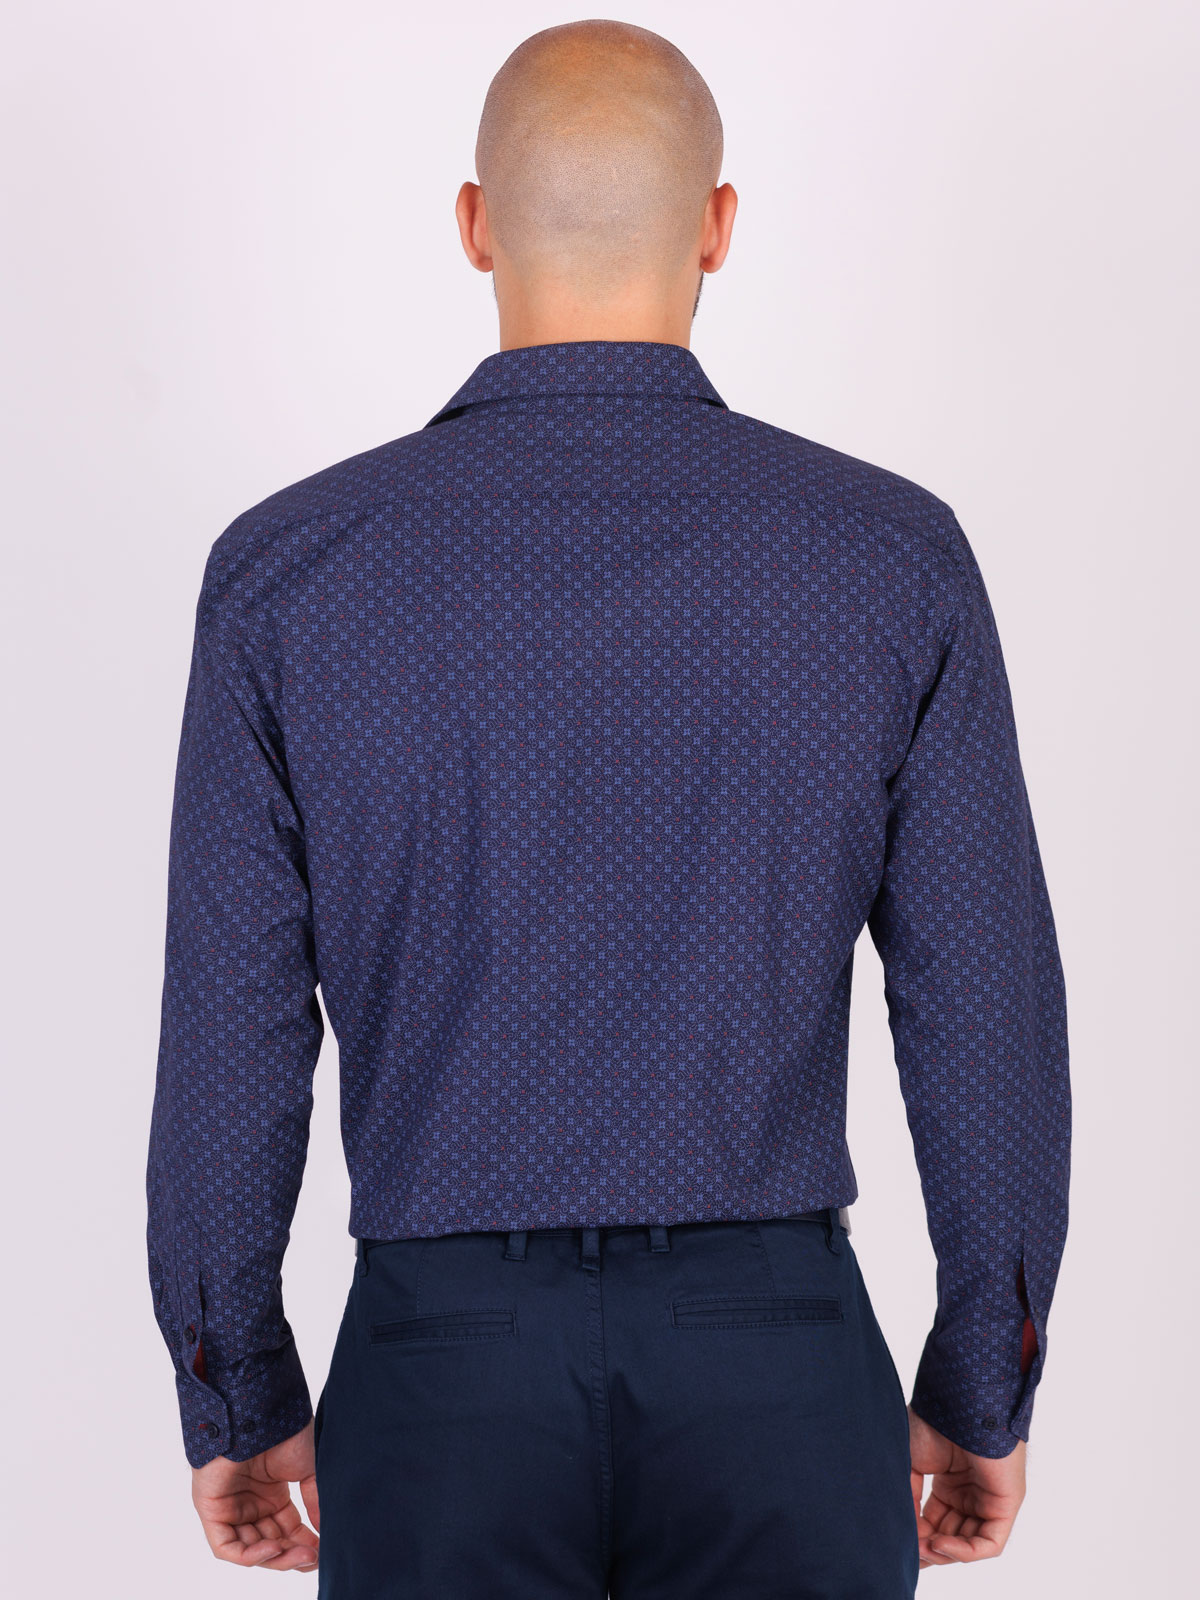 Mens shirt with burgundy patterns - 21553 € 44.43 img2